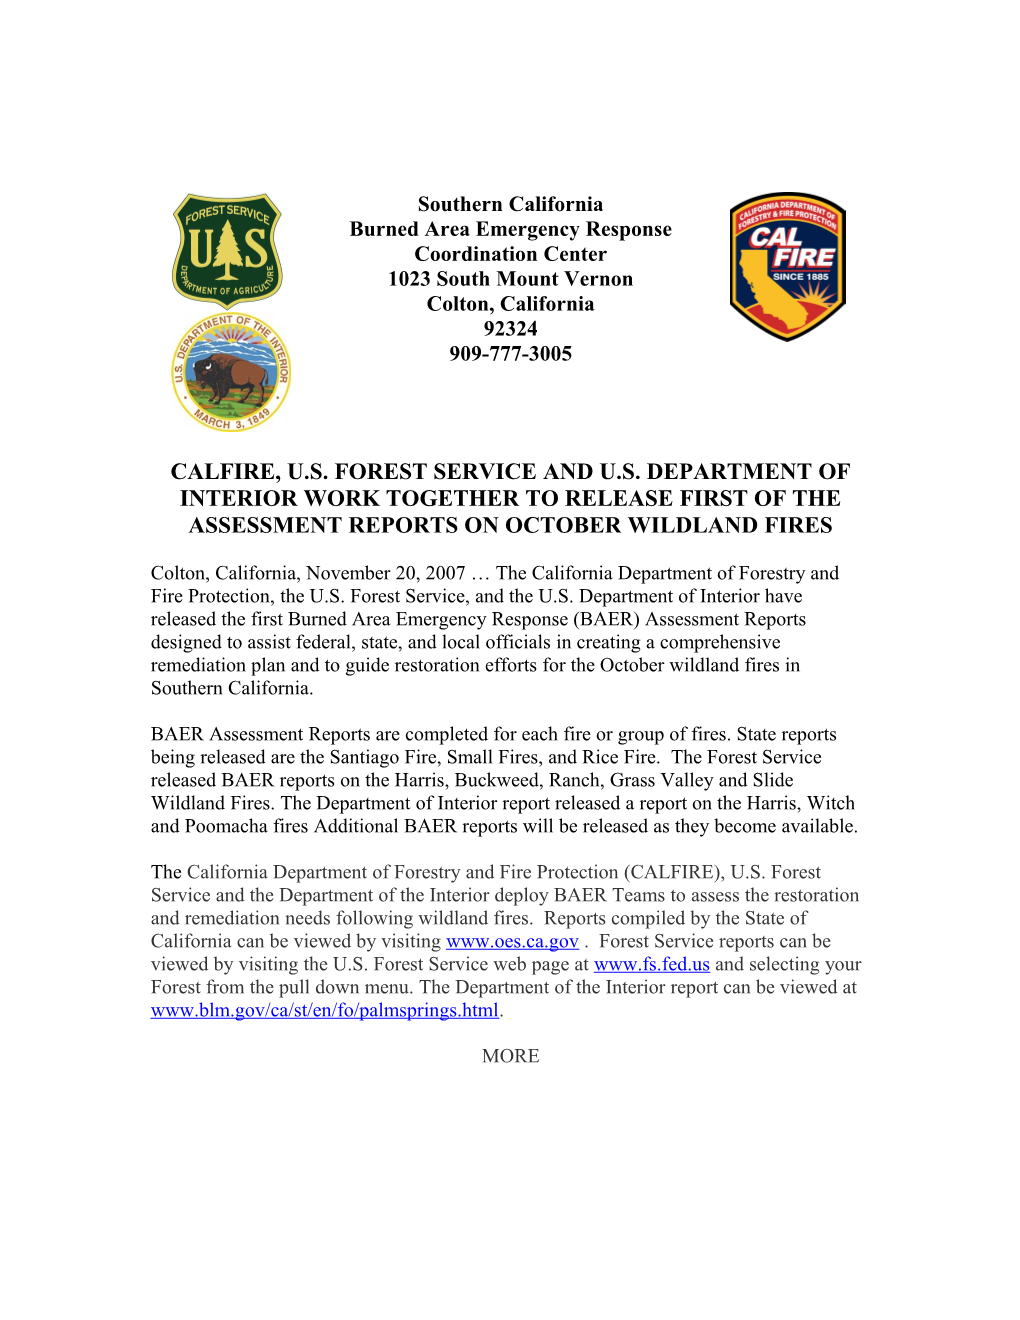 Colton, California the First Burned Area Emergency Response, (BAER), Assessment Plans Designed